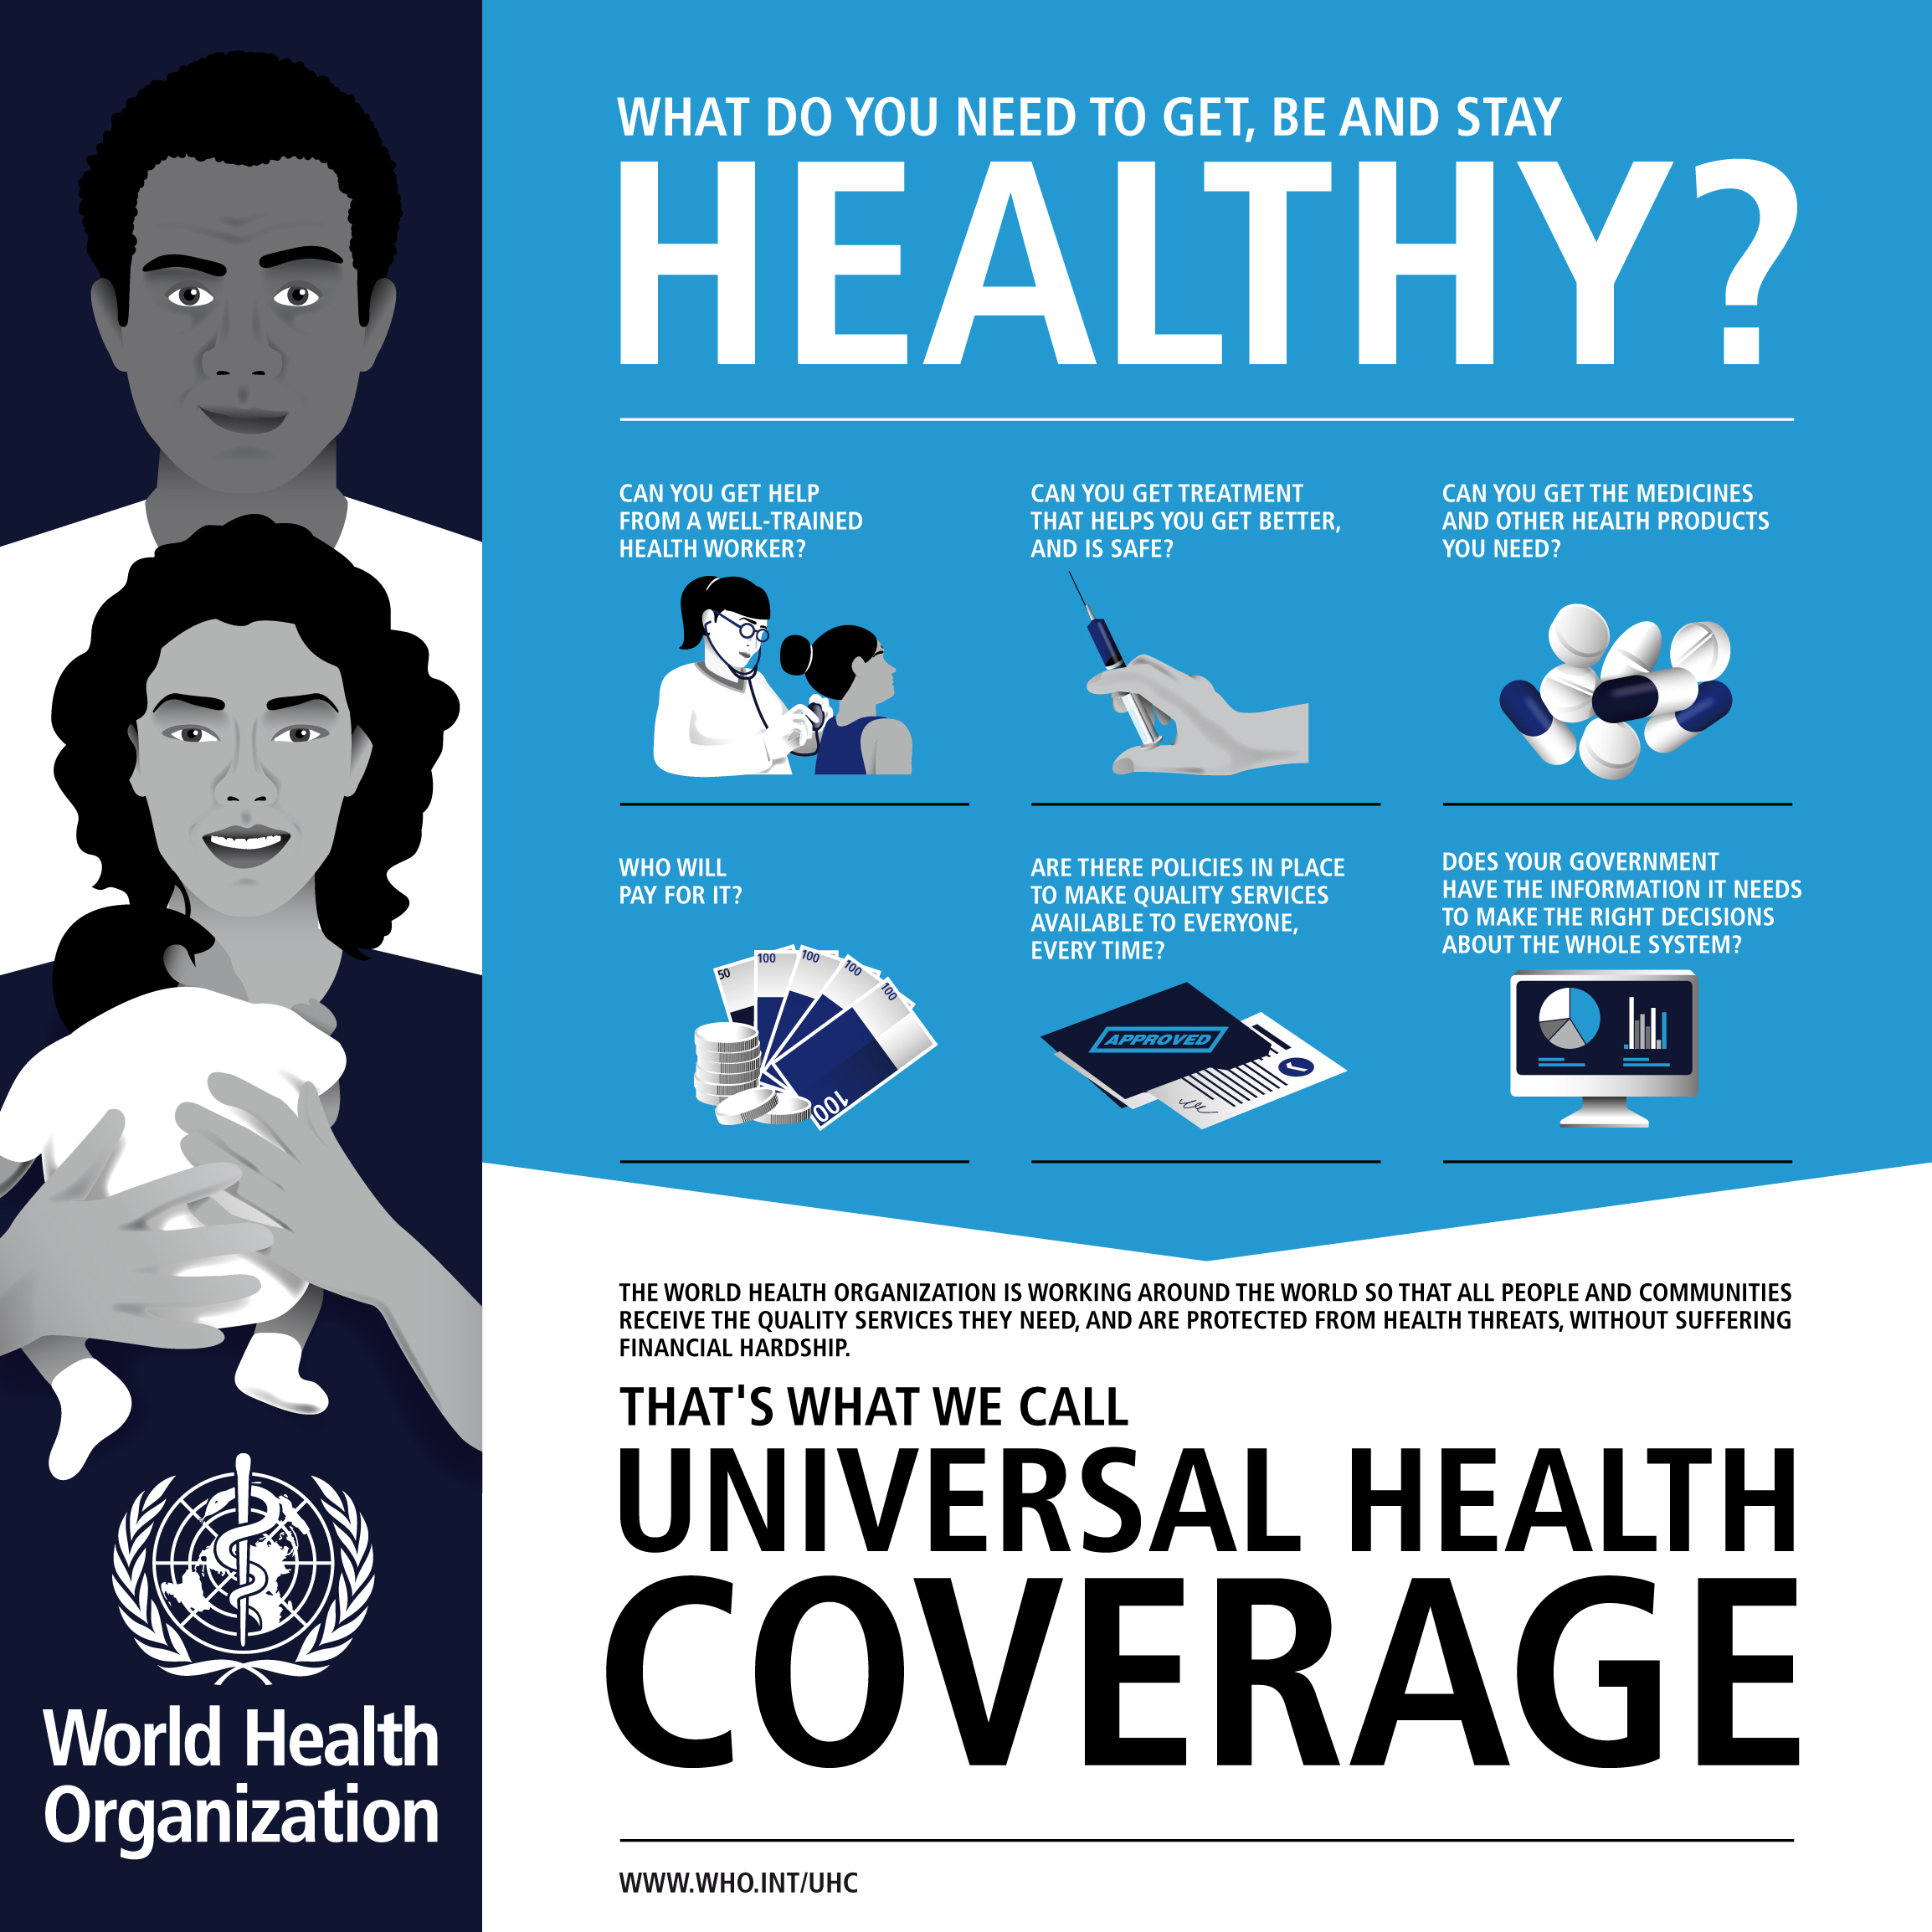 universal health 